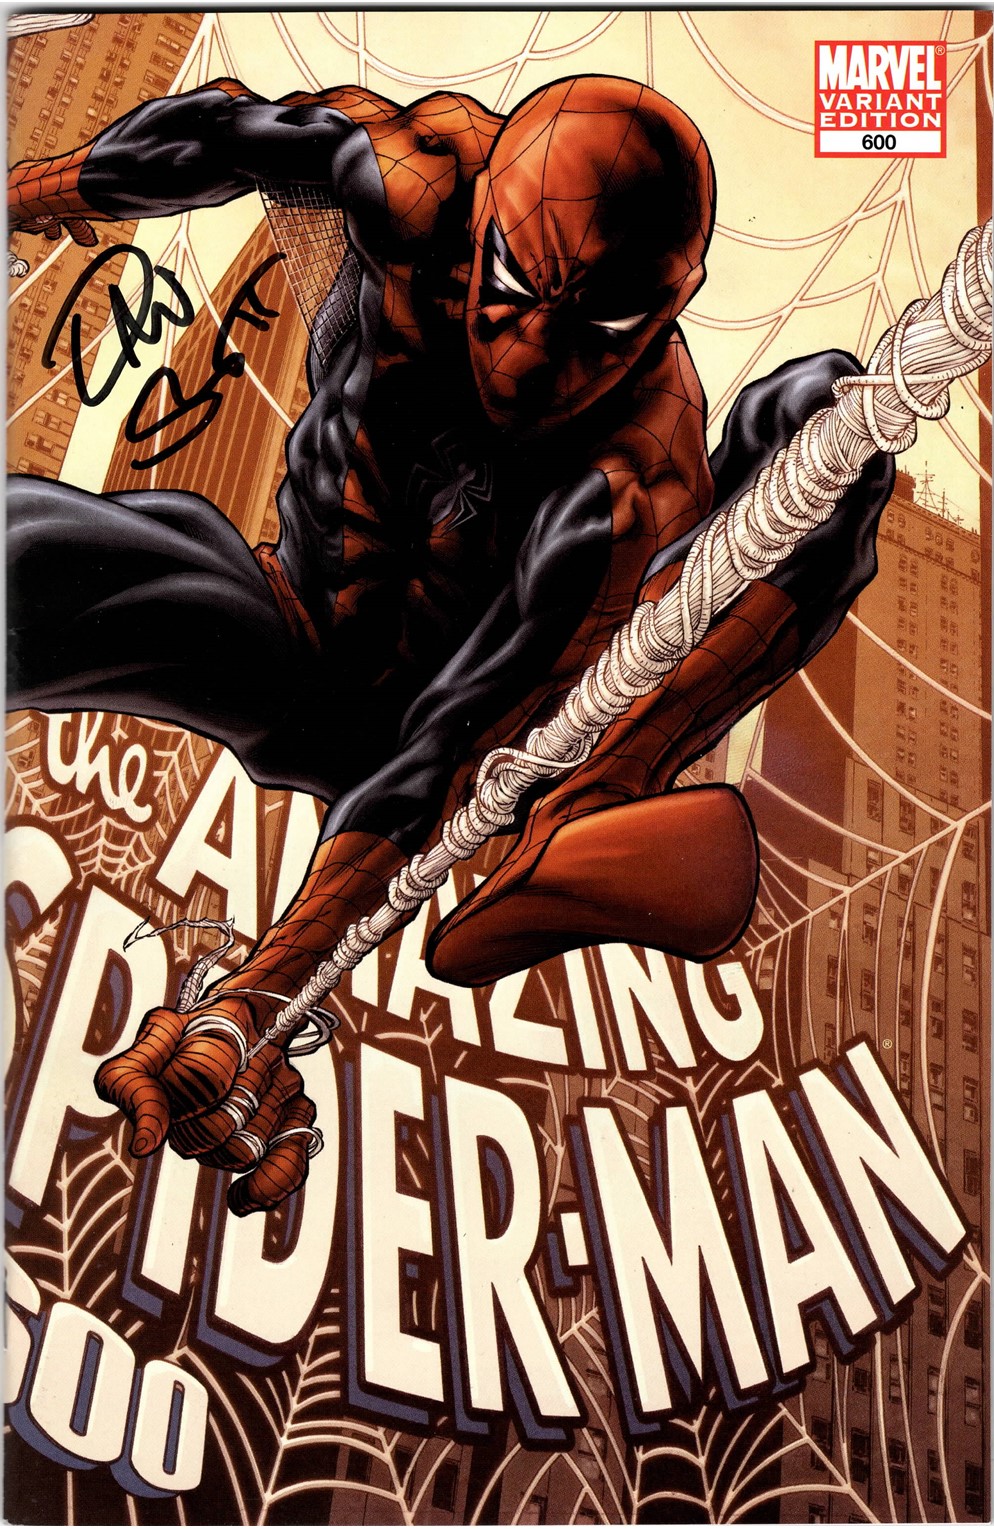 Amazing Spider-Man #600 Signed